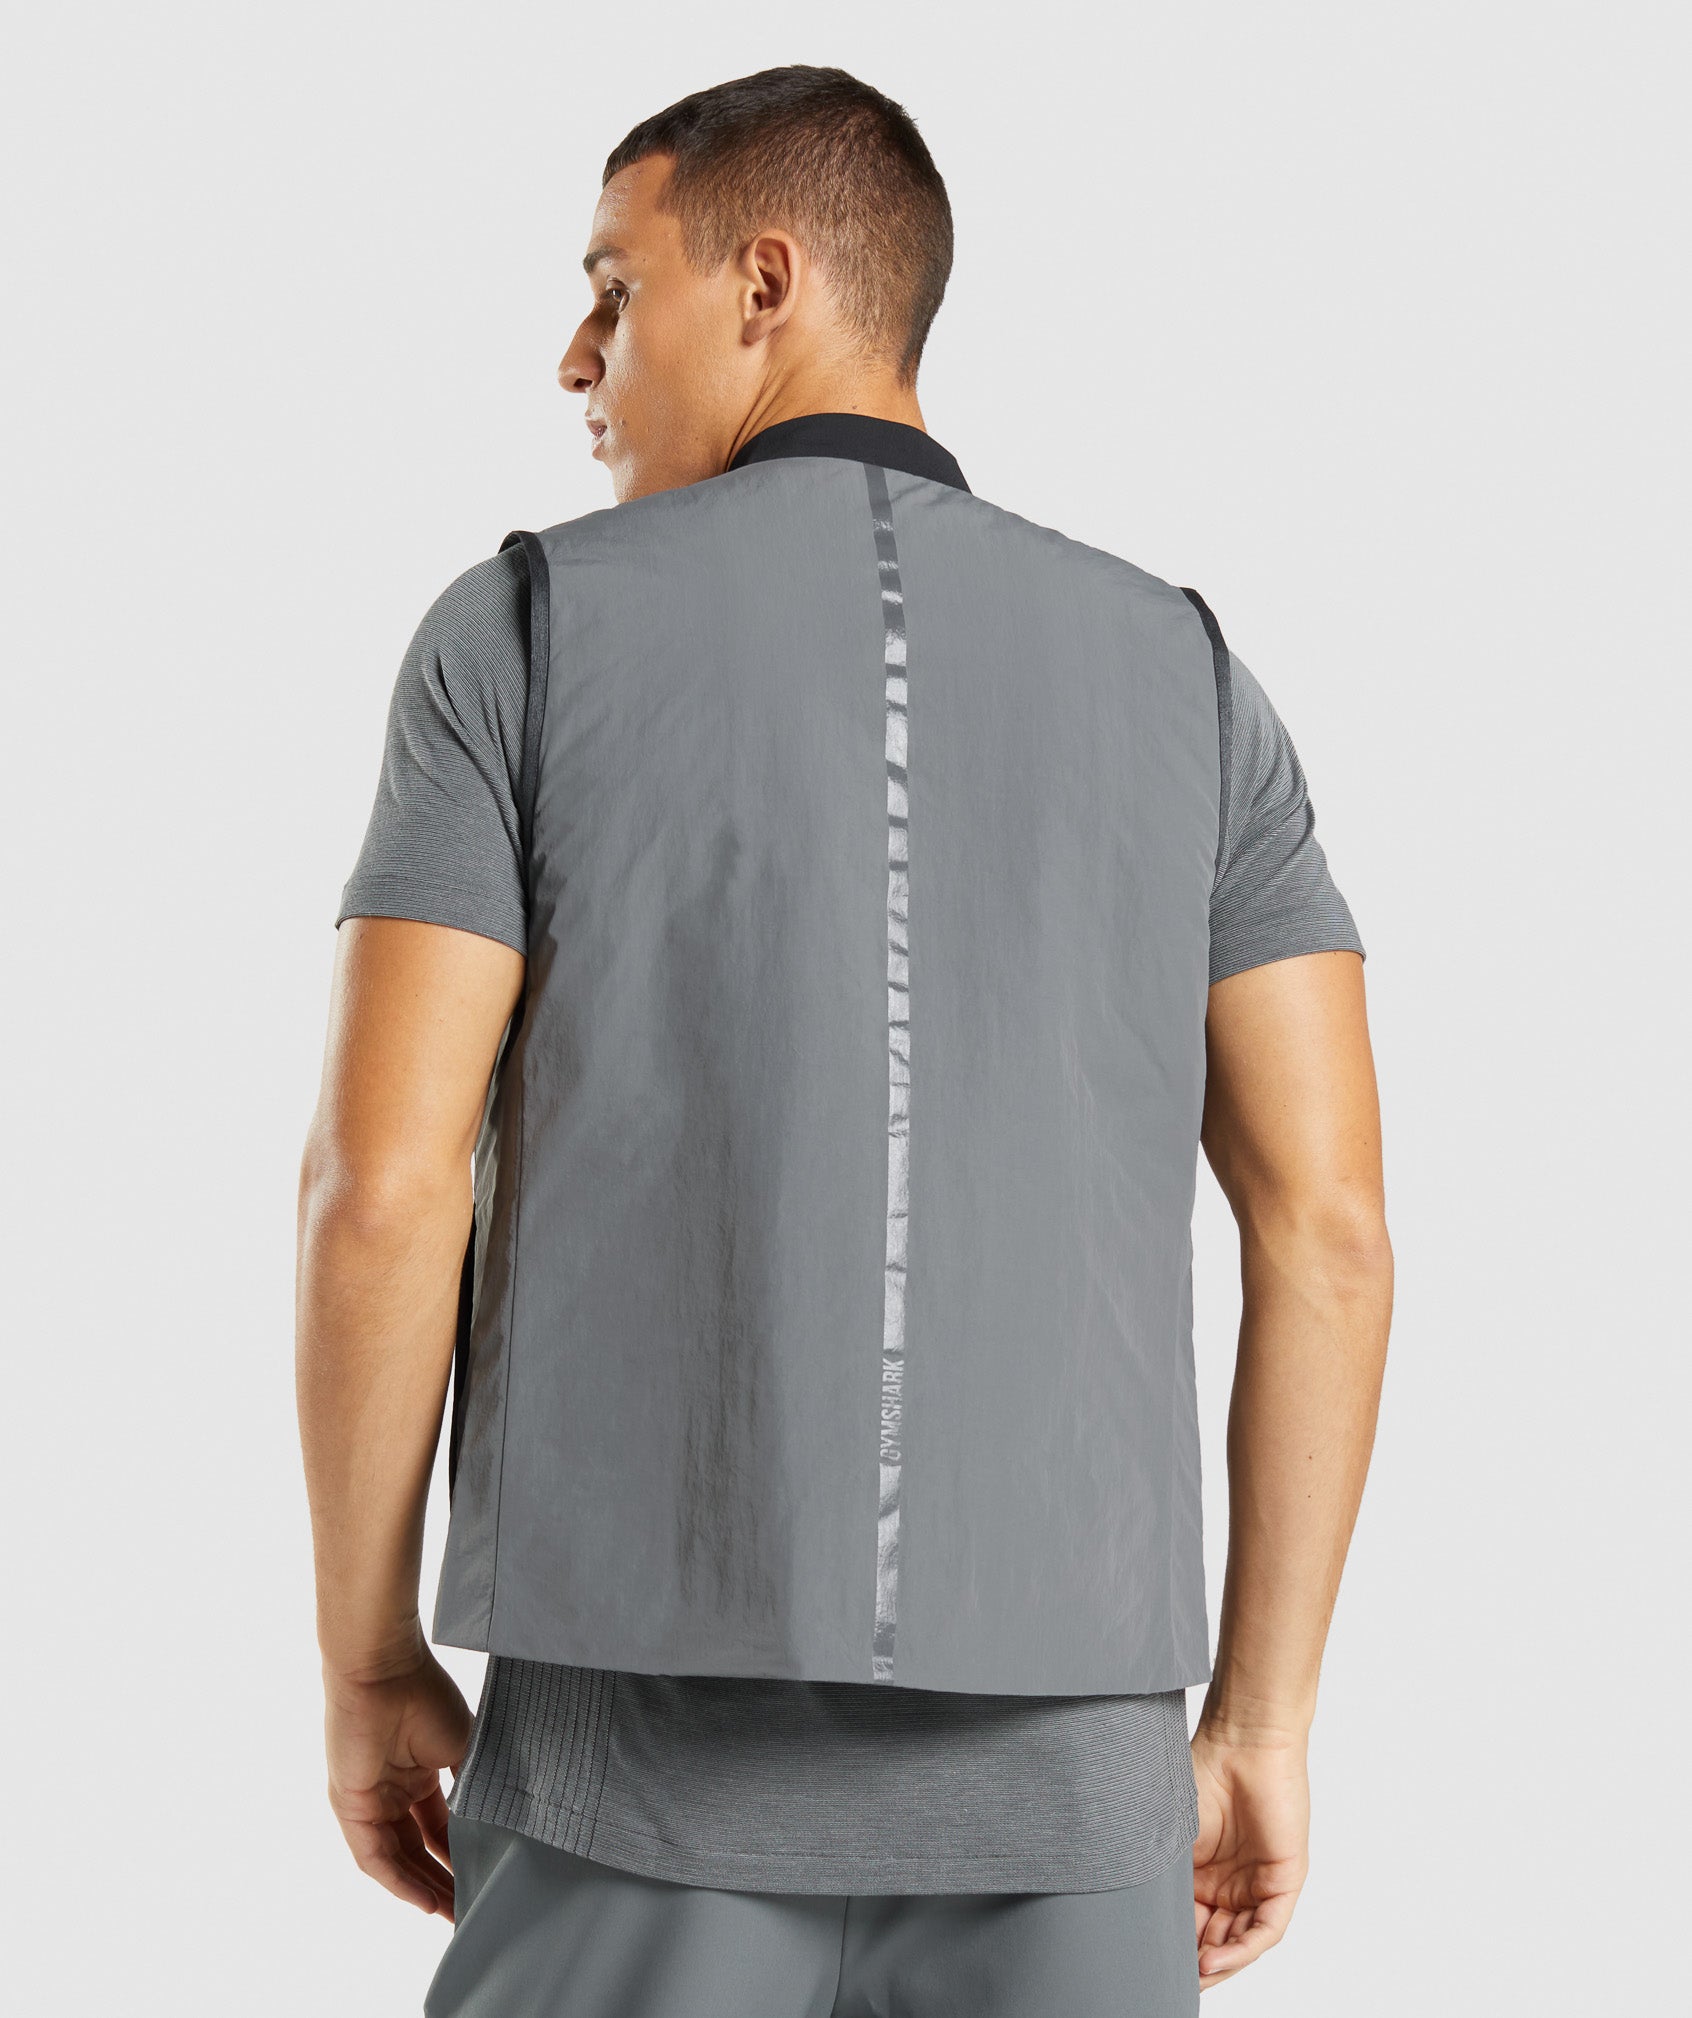 Retake Reversible Vest in Charcoal/Black - view 3